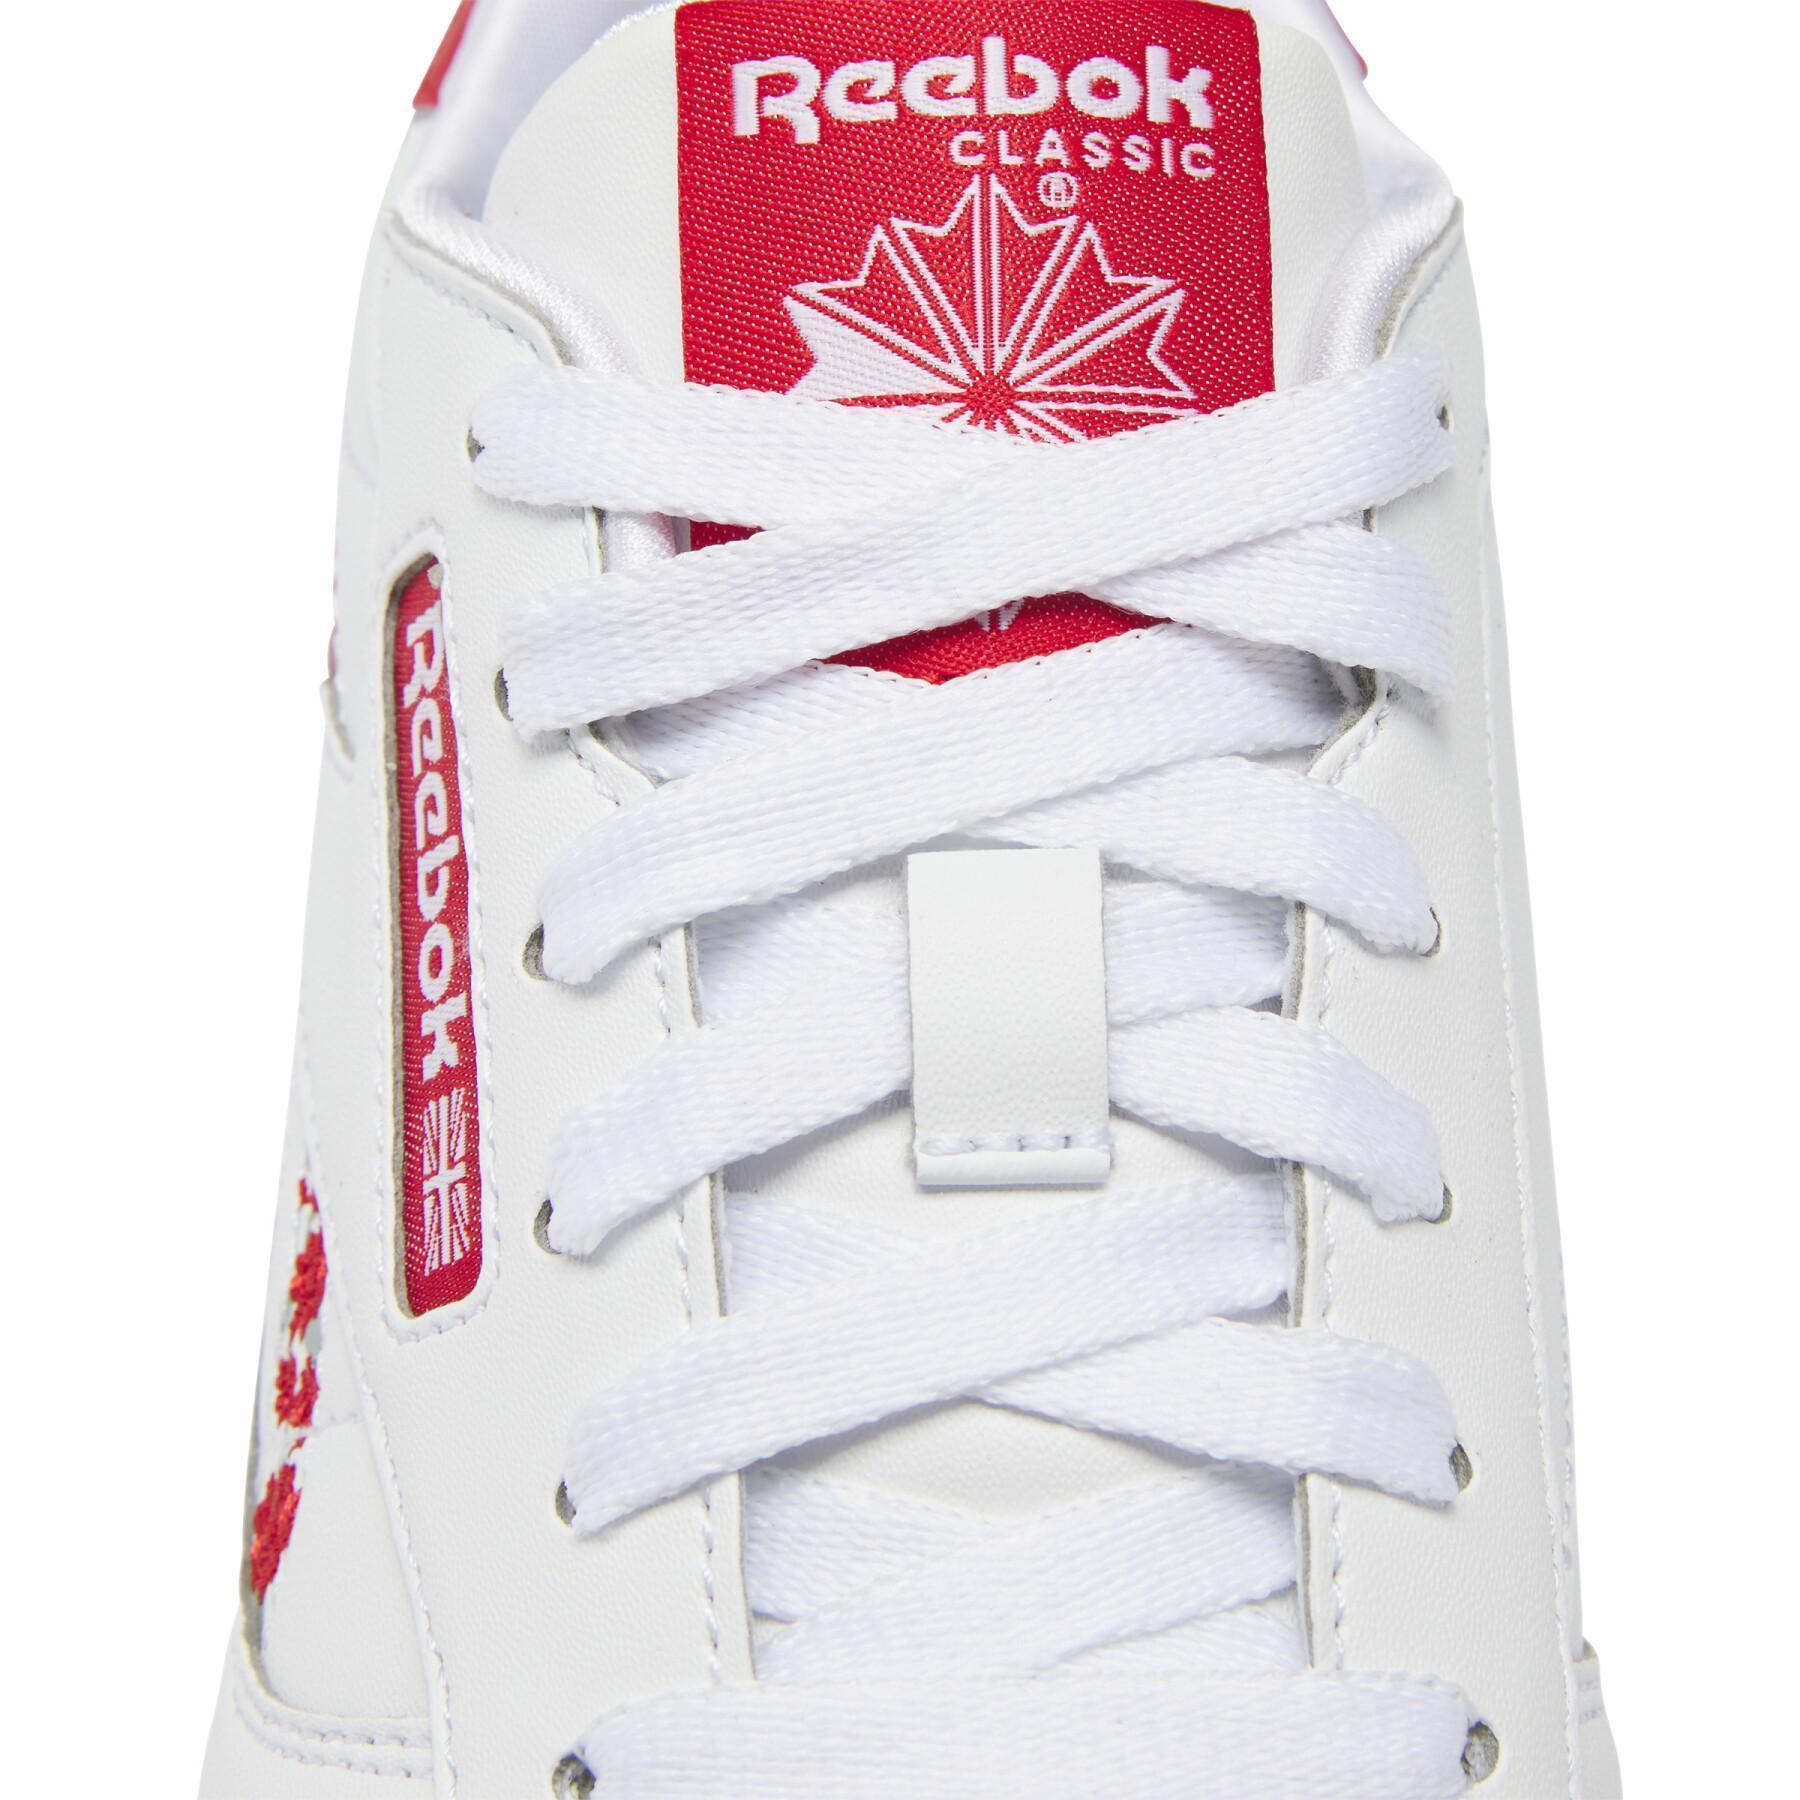 Girl sneakers Reebok Classic